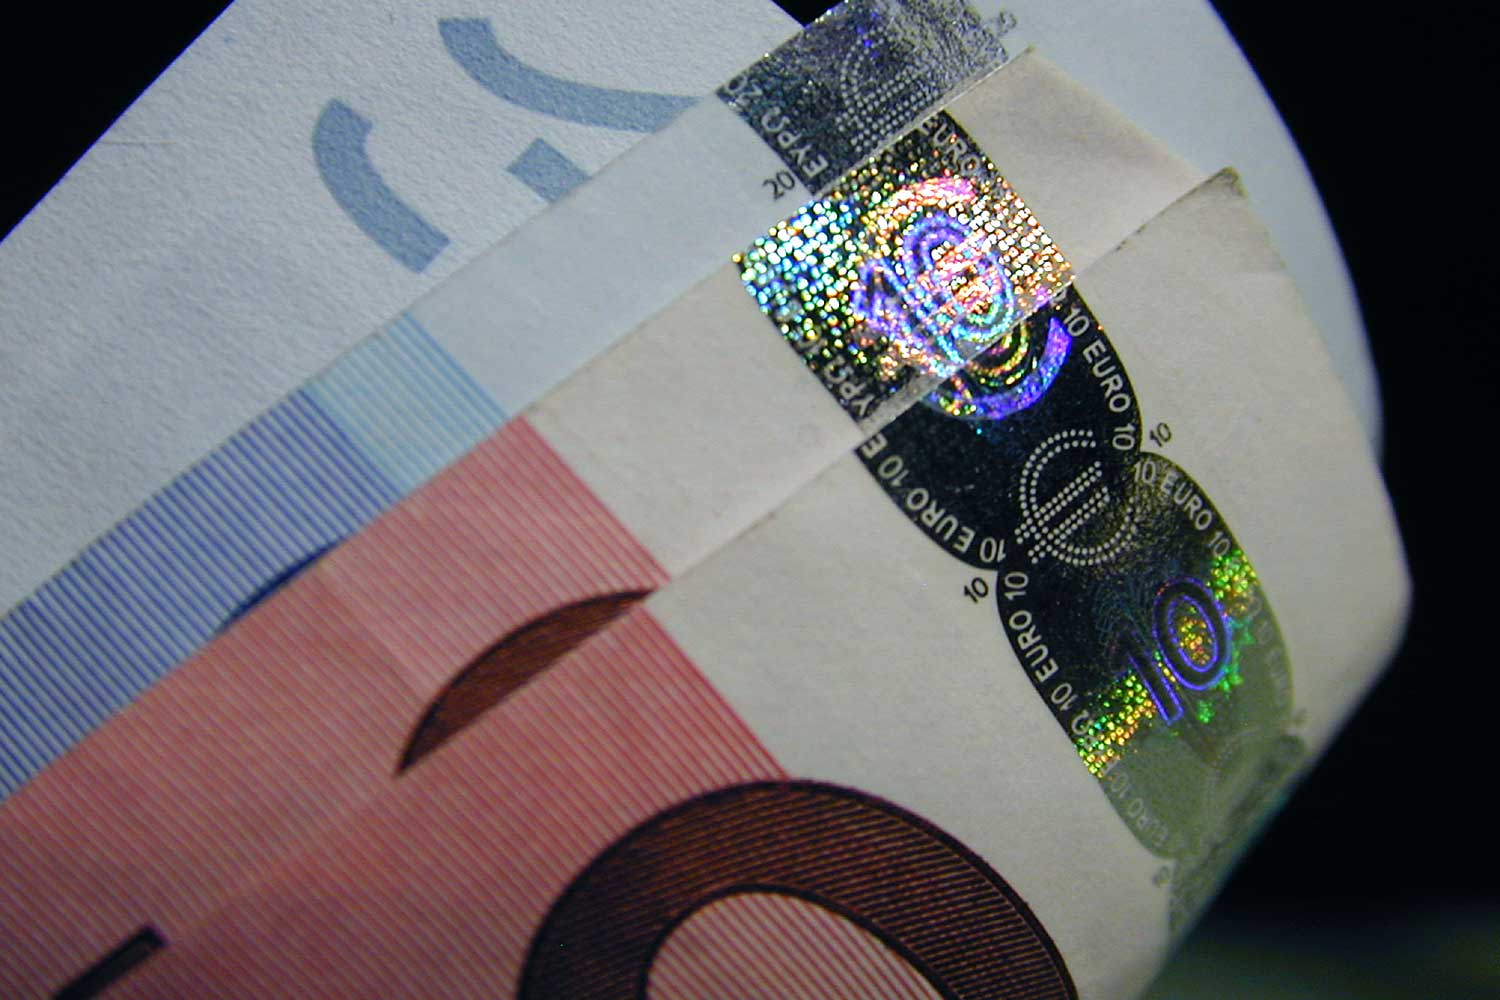 eurobiljetten-echtheid